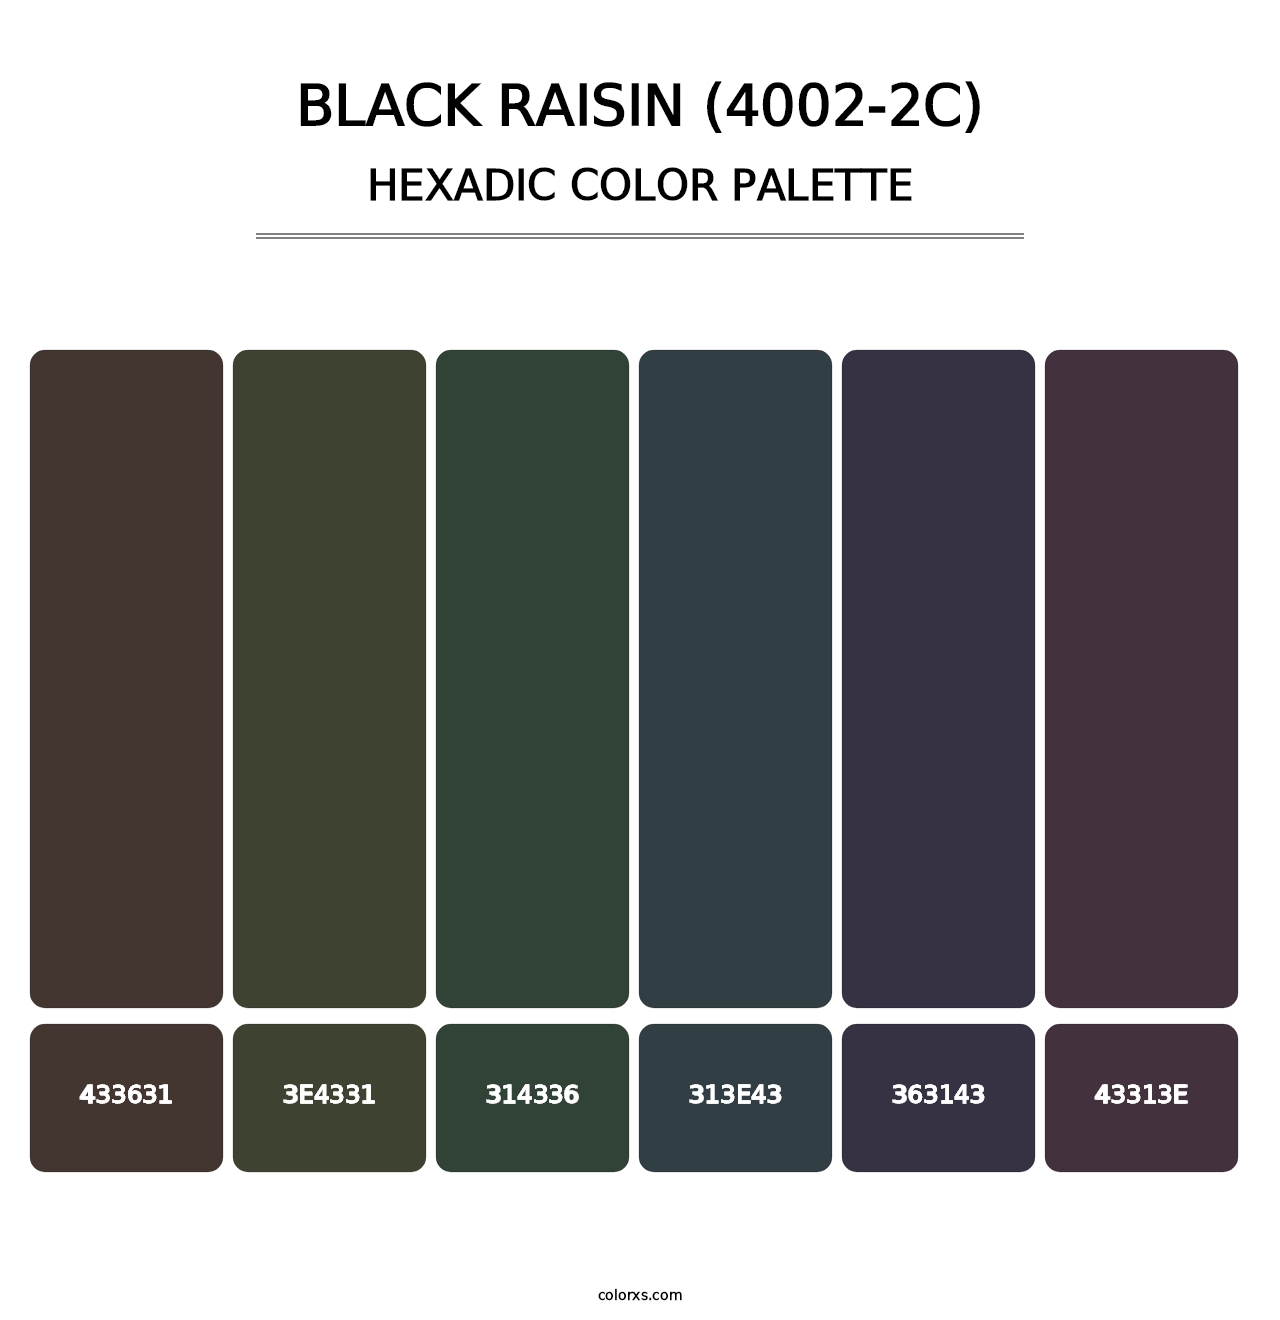 Black Raisin (4002-2C) - Hexadic Color Palette